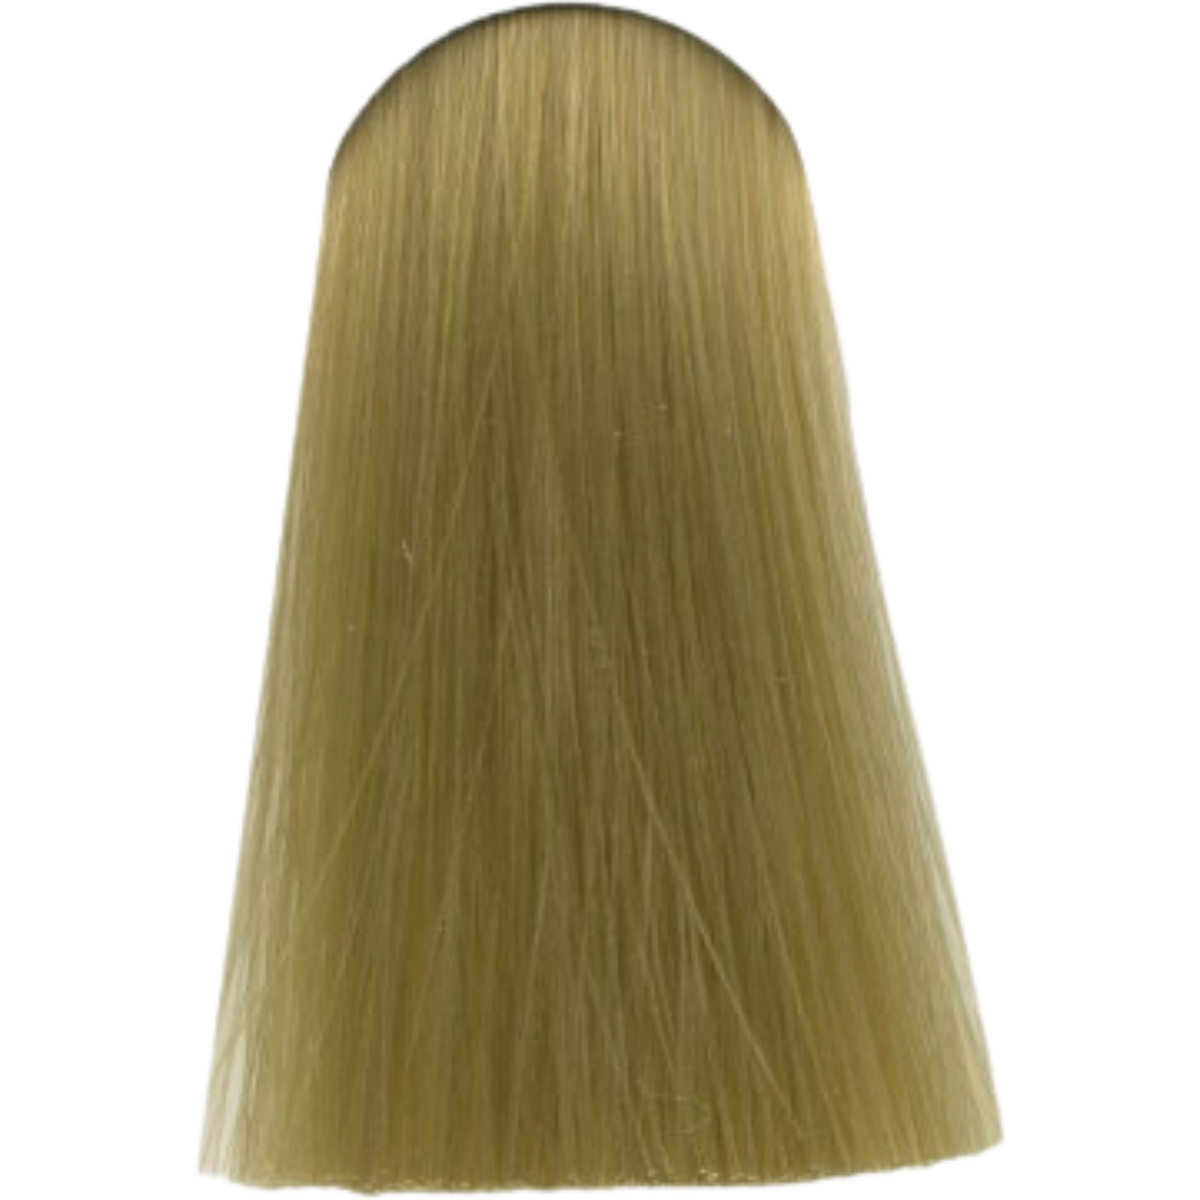 צבע שיער 10.0 LIGHTEST BLONDE NATURAL אינדולה INDOLA צבע בסיס לשיער 60 גרם